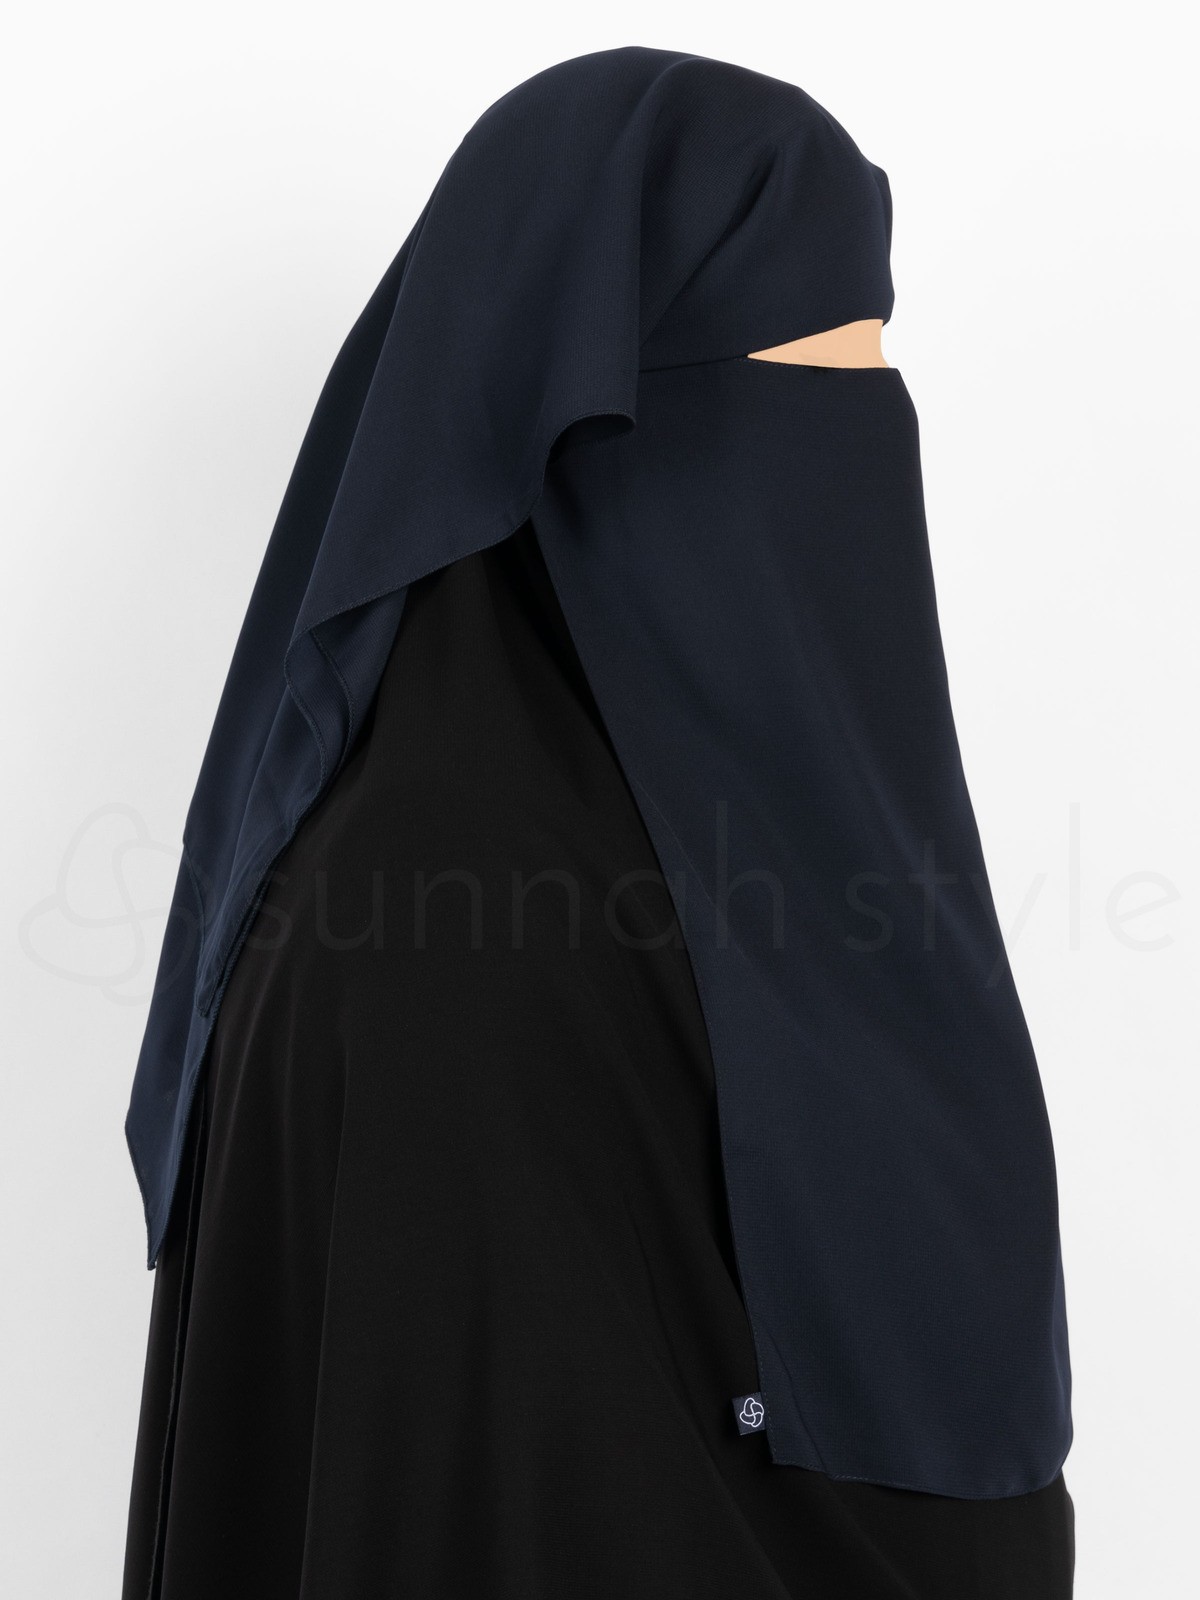 Sunnah Style - Three Layer Niqab (Navy Blue)